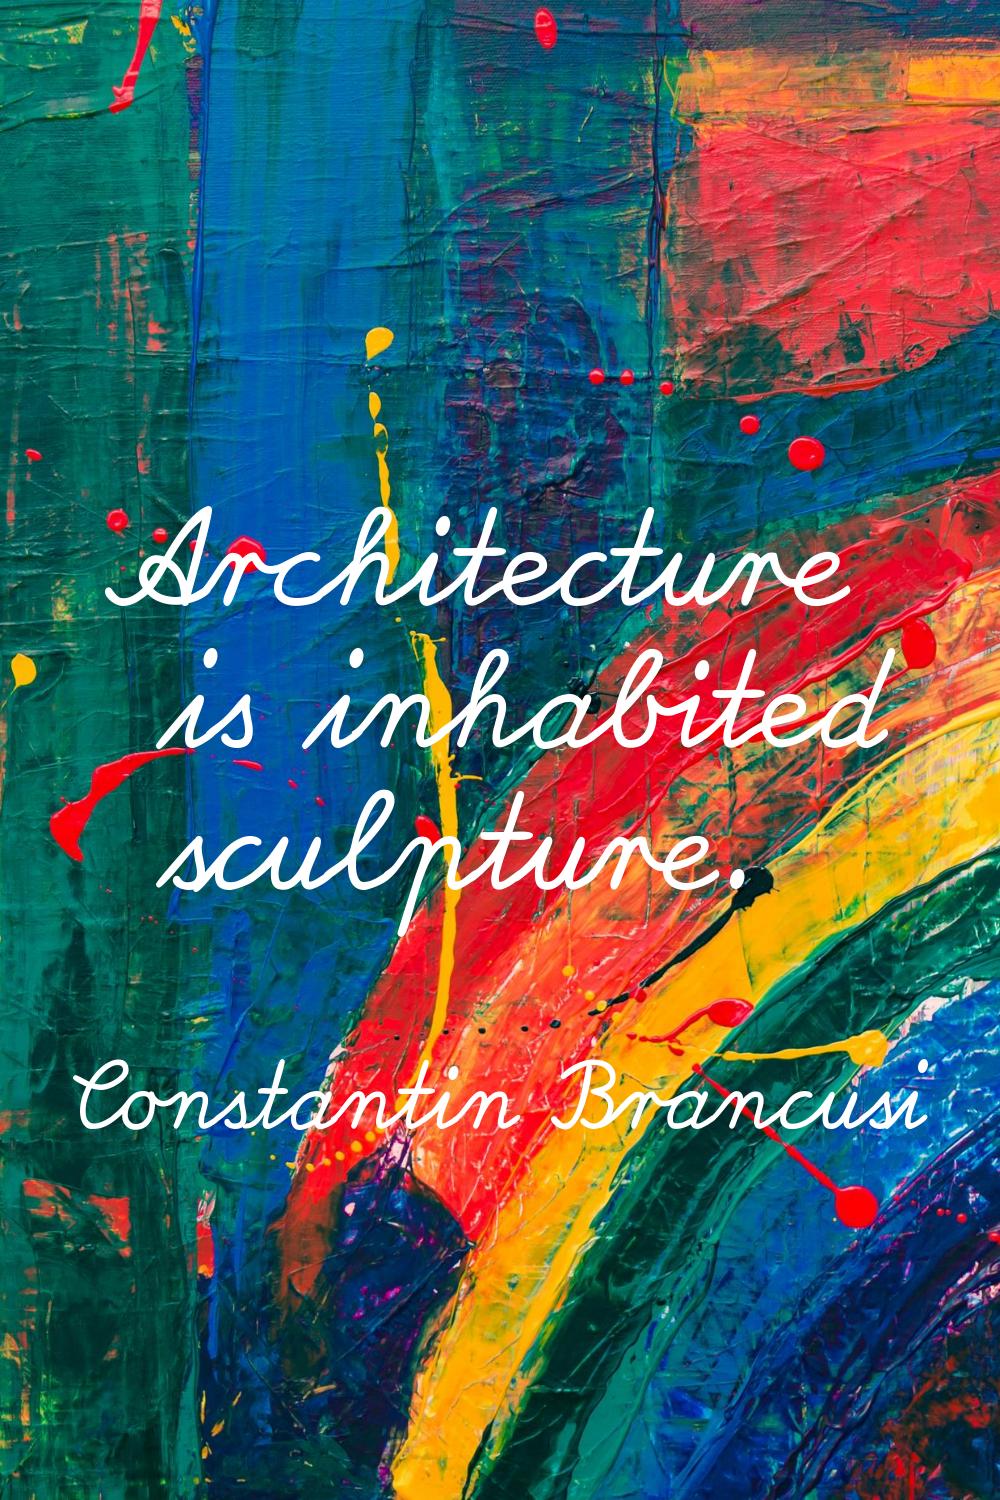 Architecture is inhabited sculpture.